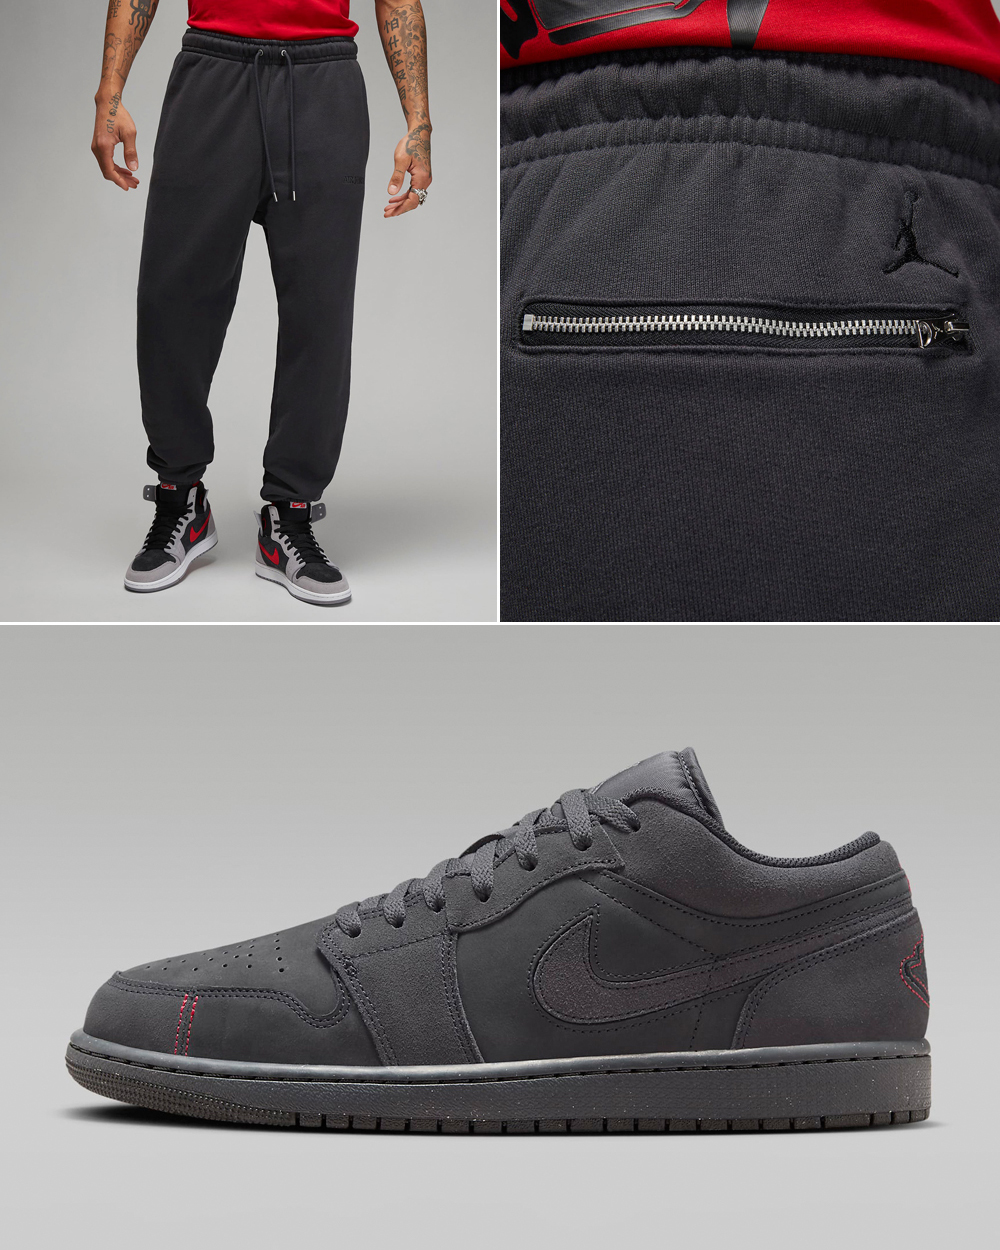 Air-Jordan-1-Low-Craft-Dark-Smoke-Grey-Pants-Matching-Outfit